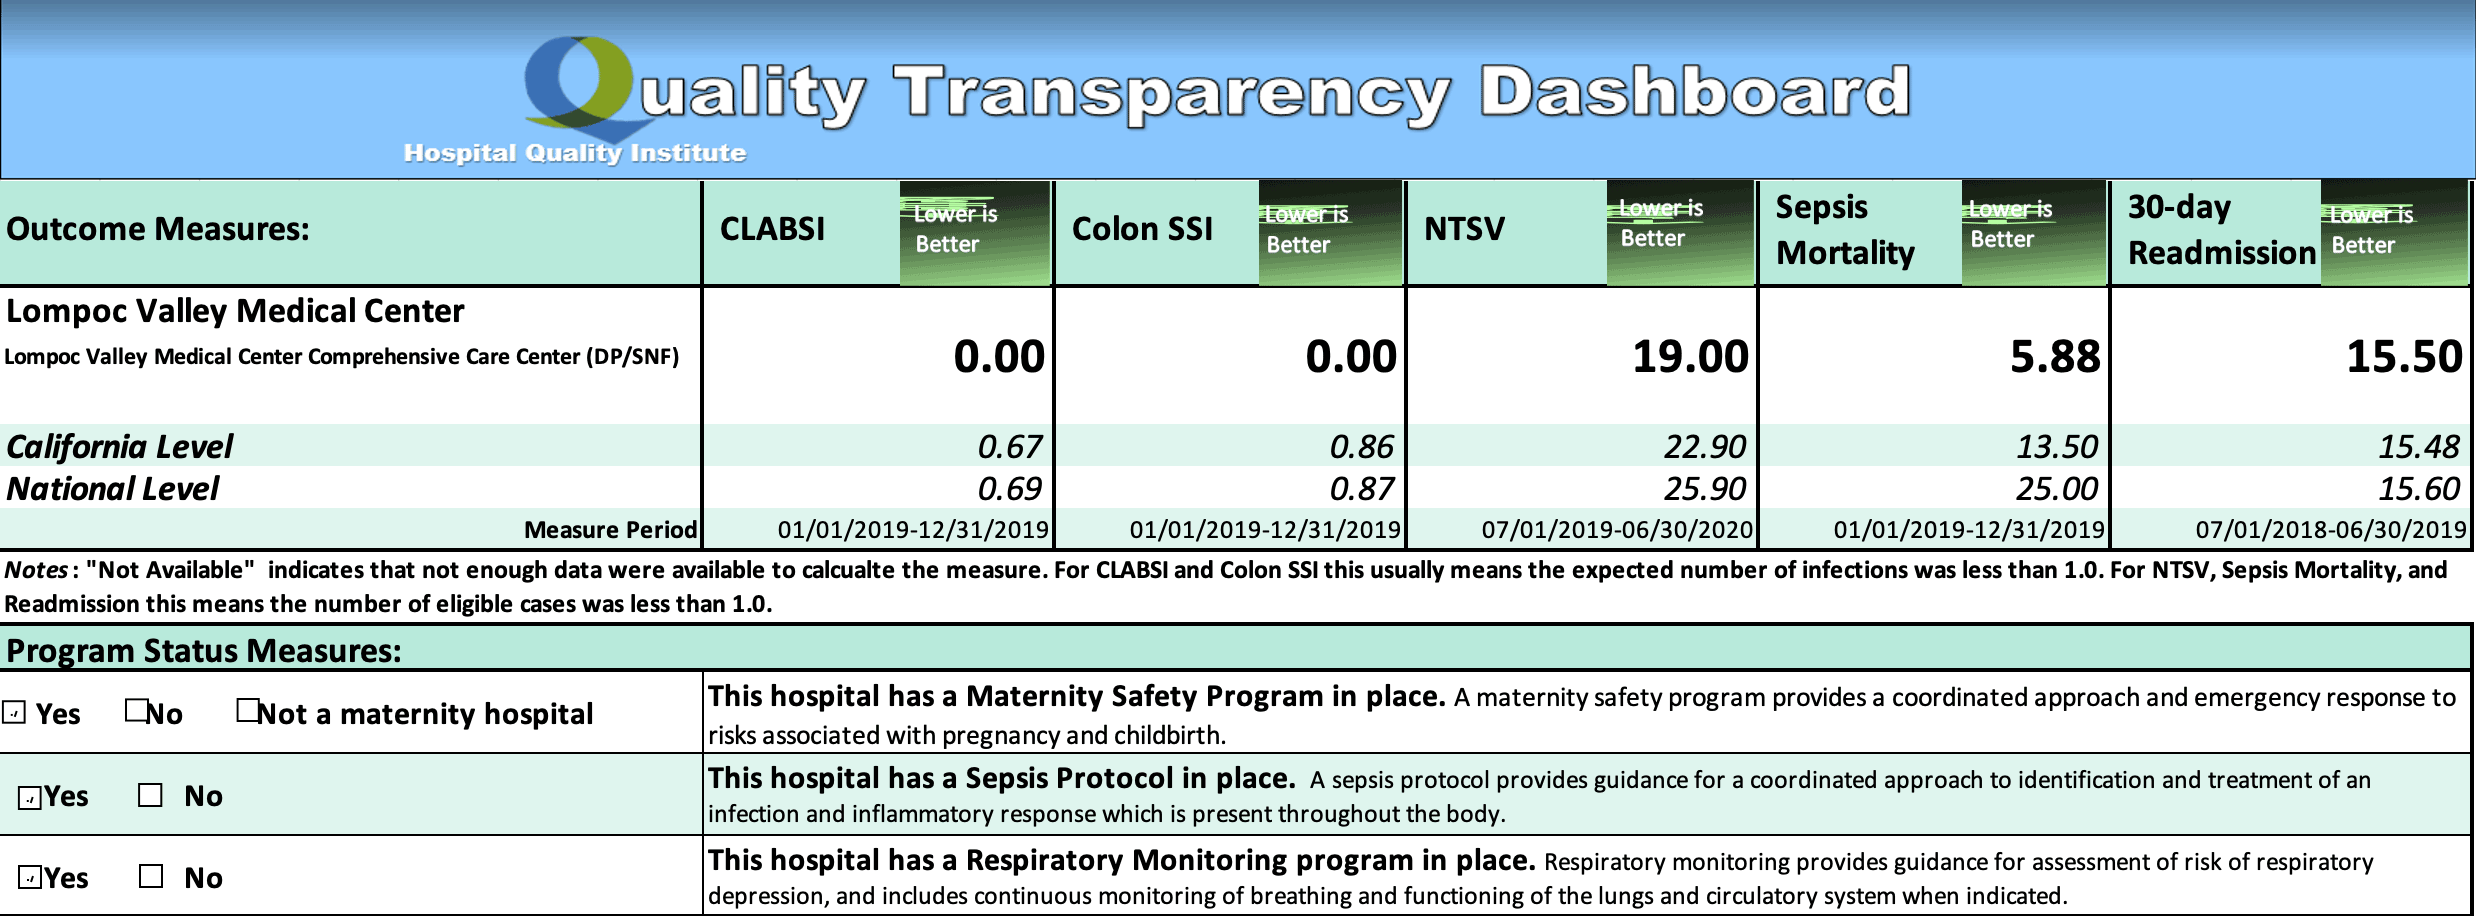 quality transparency dashboard